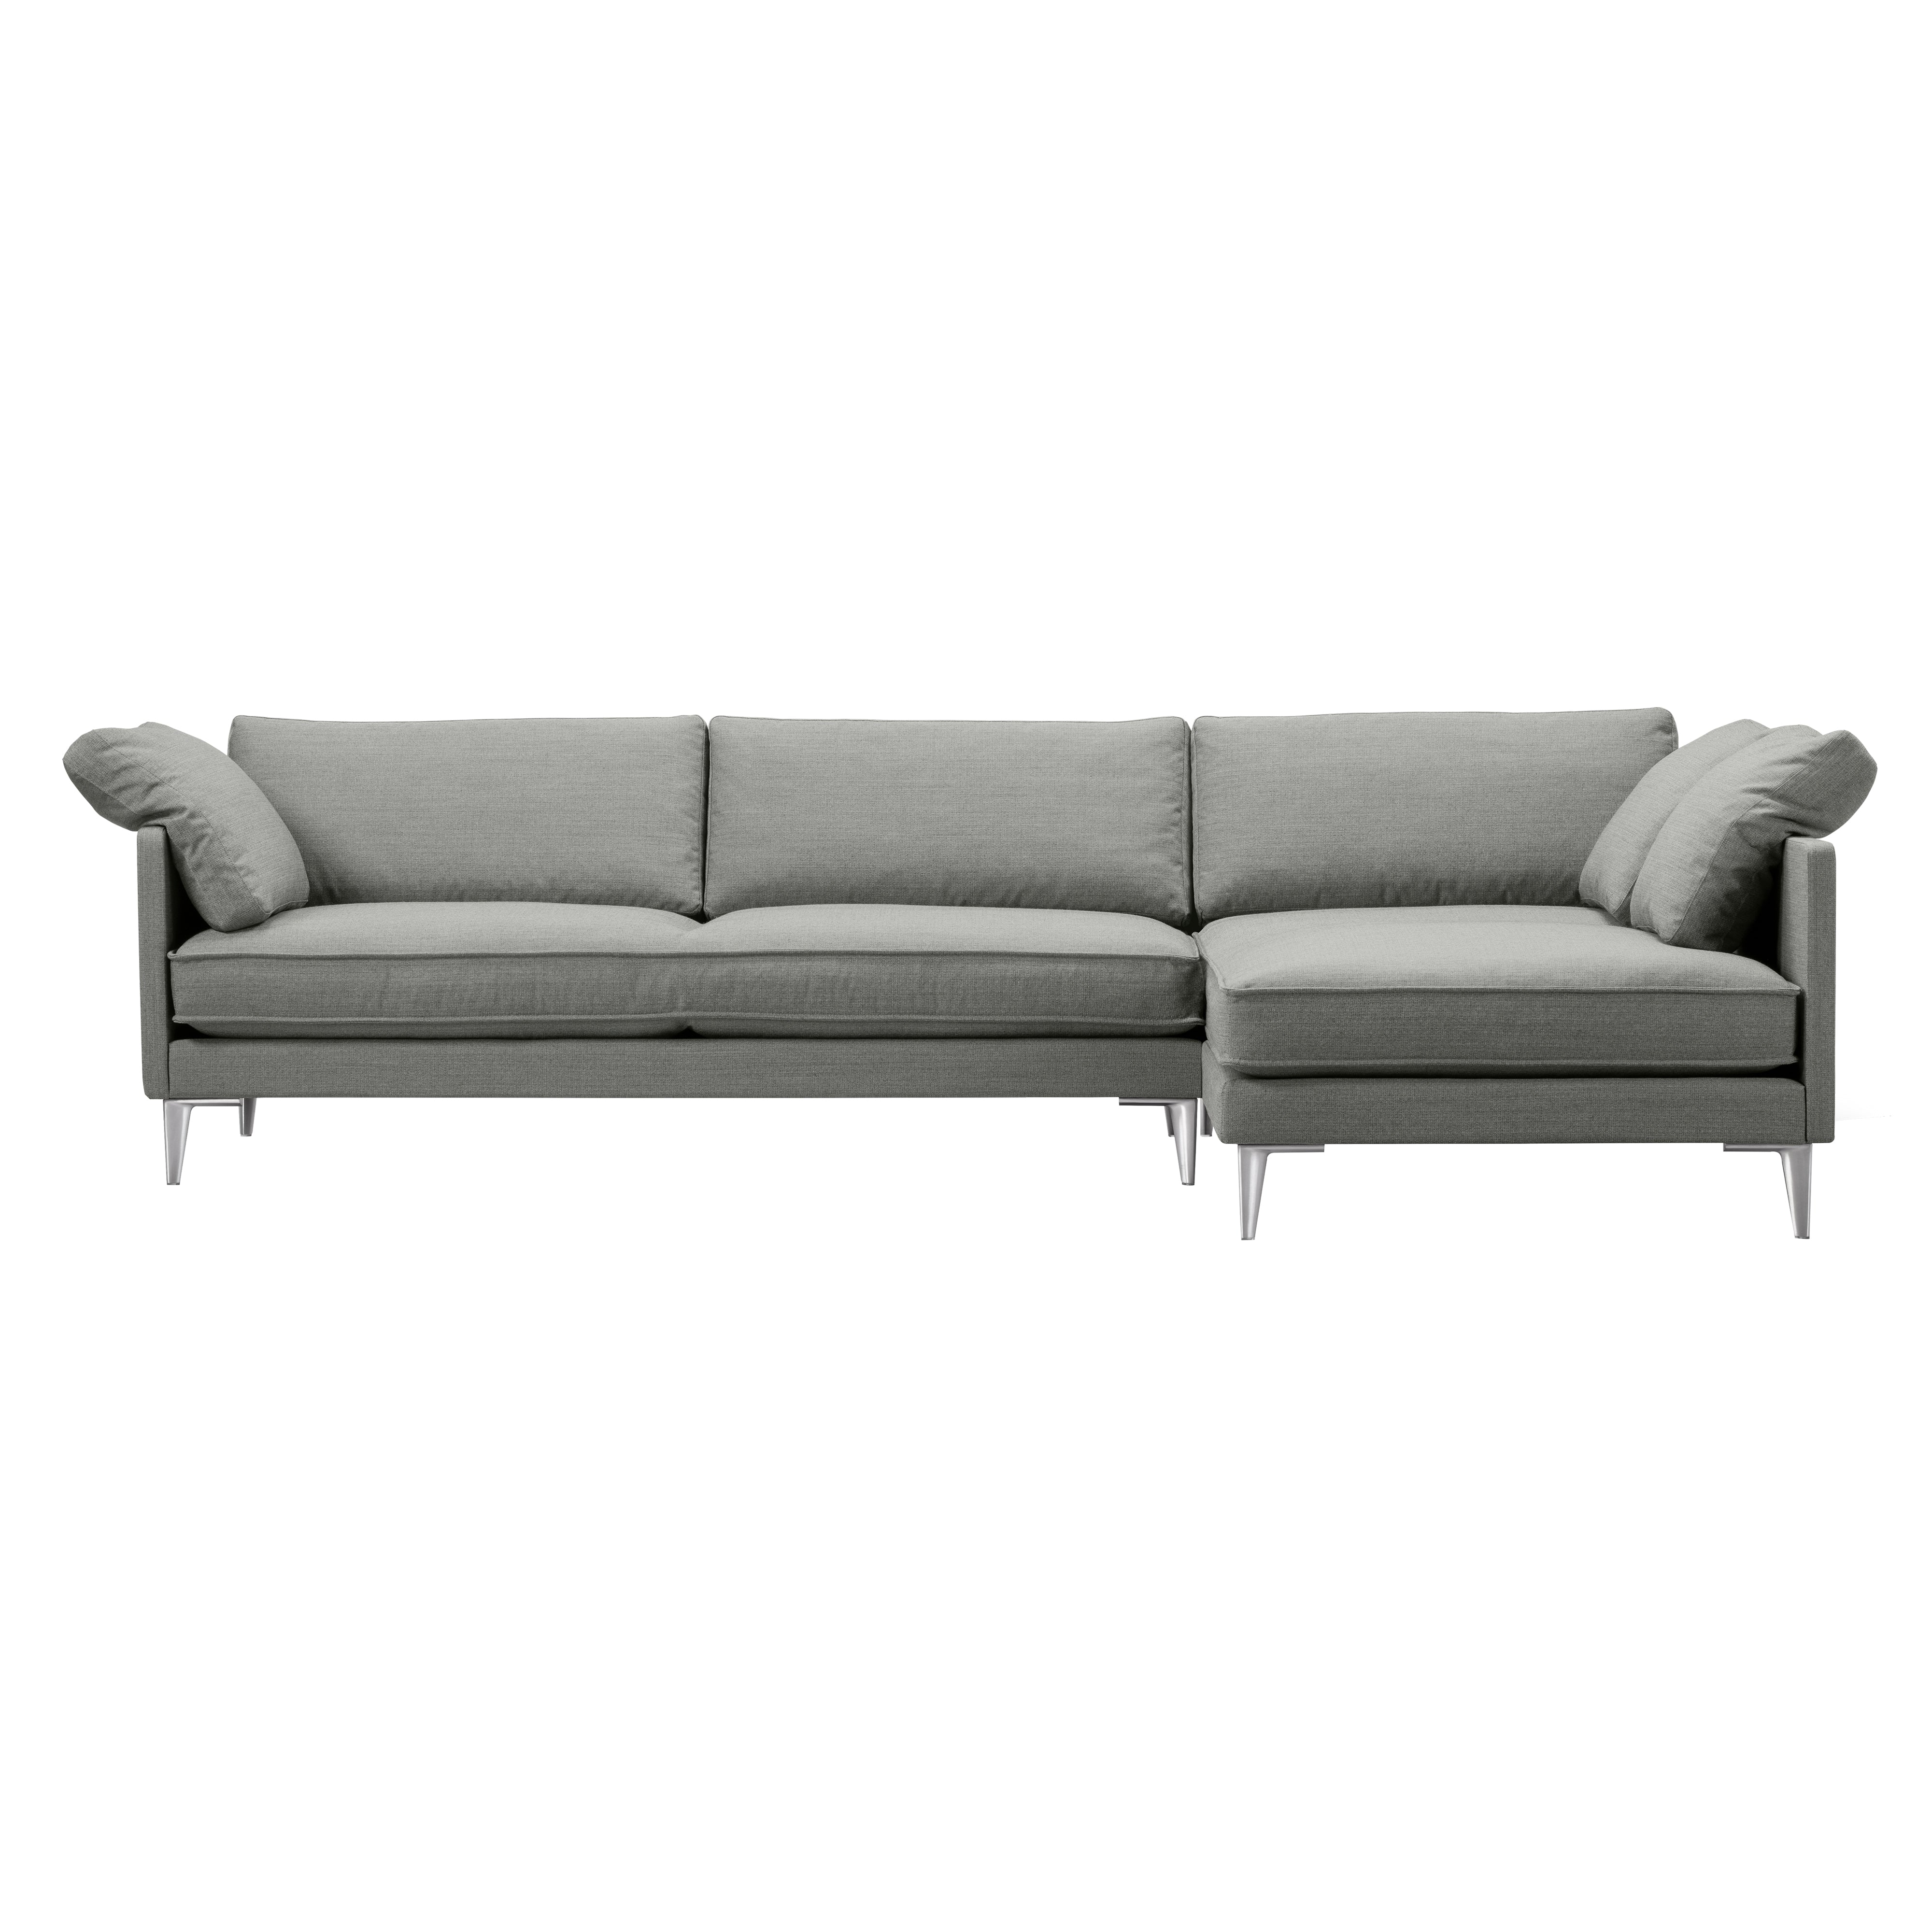 EJ295 Chaise Sofa: Large + Chrome + Right